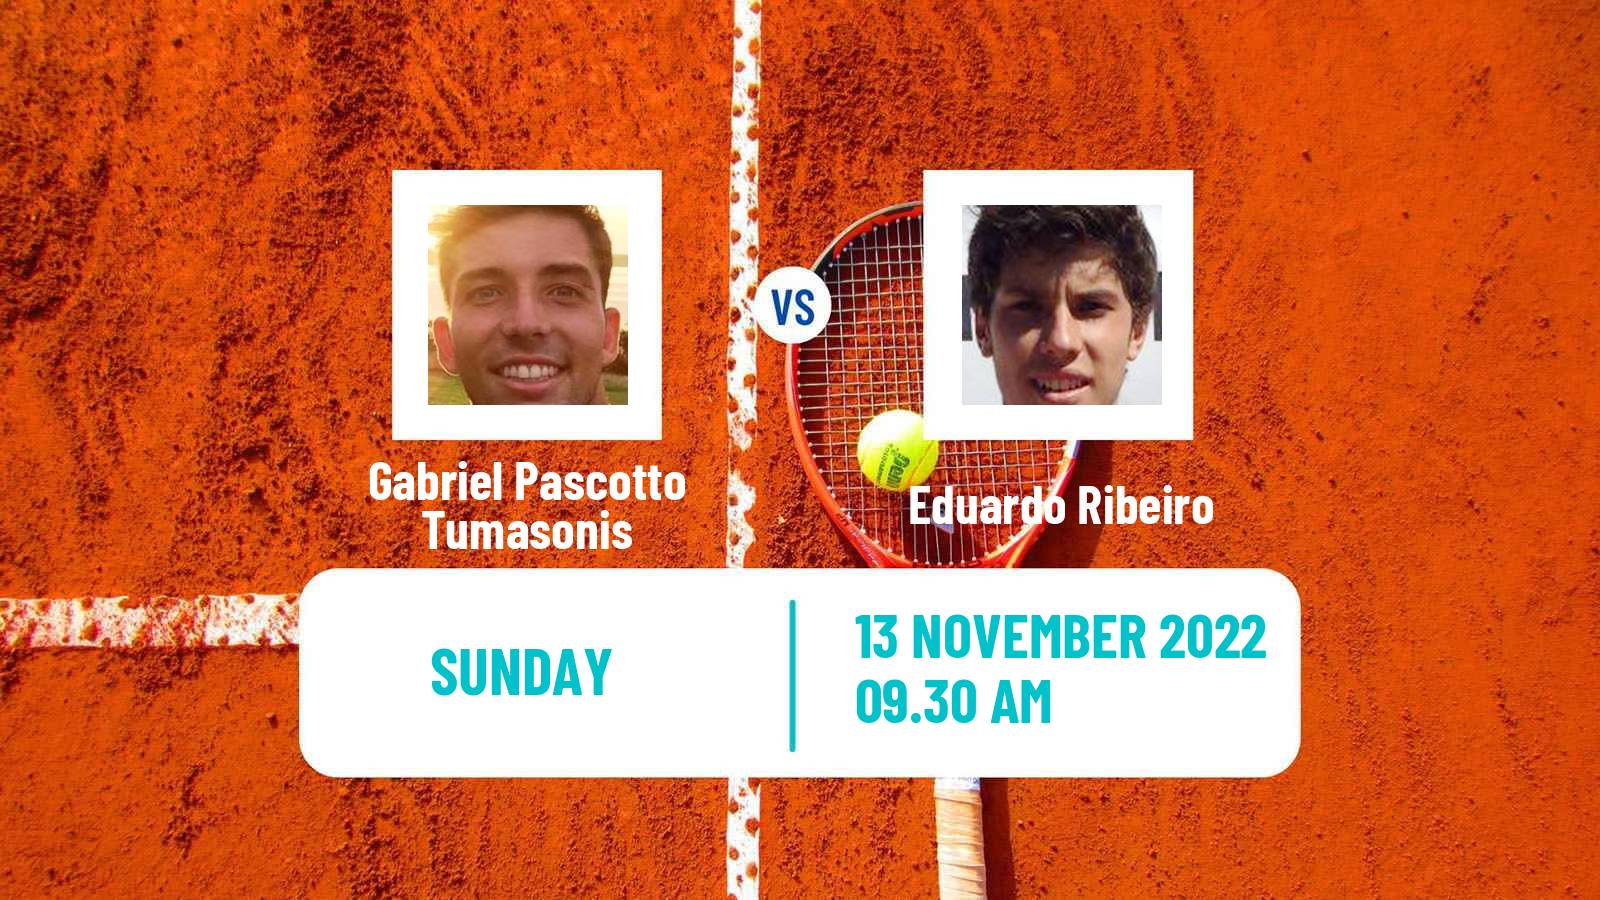 Tennis ATP Challenger Gabriel Pascotto Tumasonis - Eduardo Ribeiro